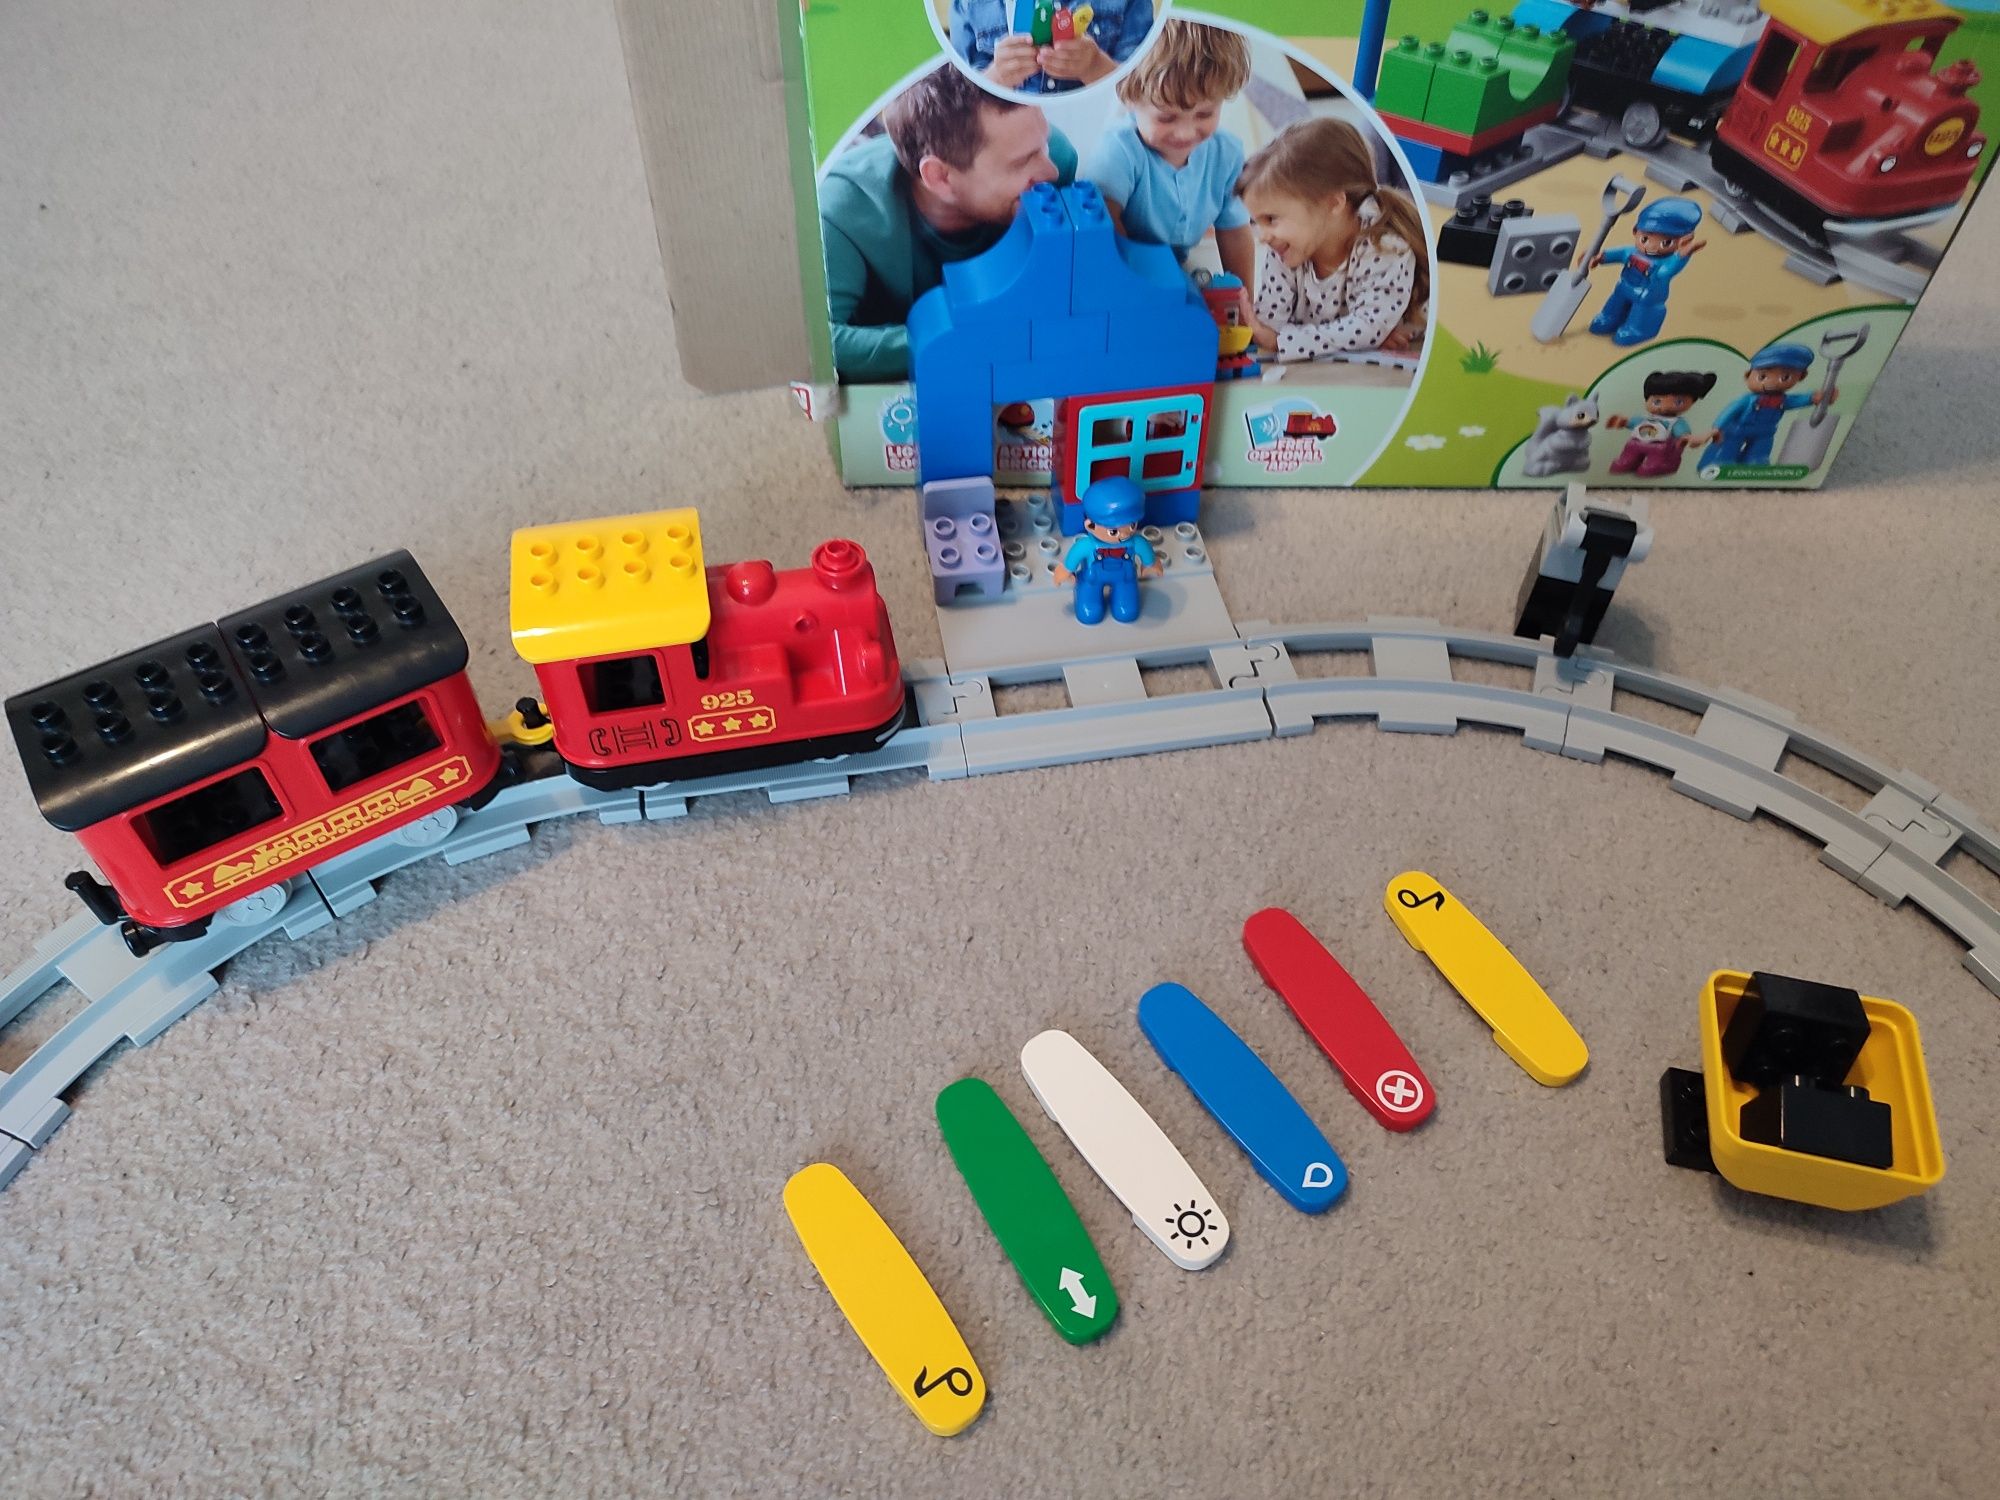 Lego Duplo 10874 pociąg 2-5 lat